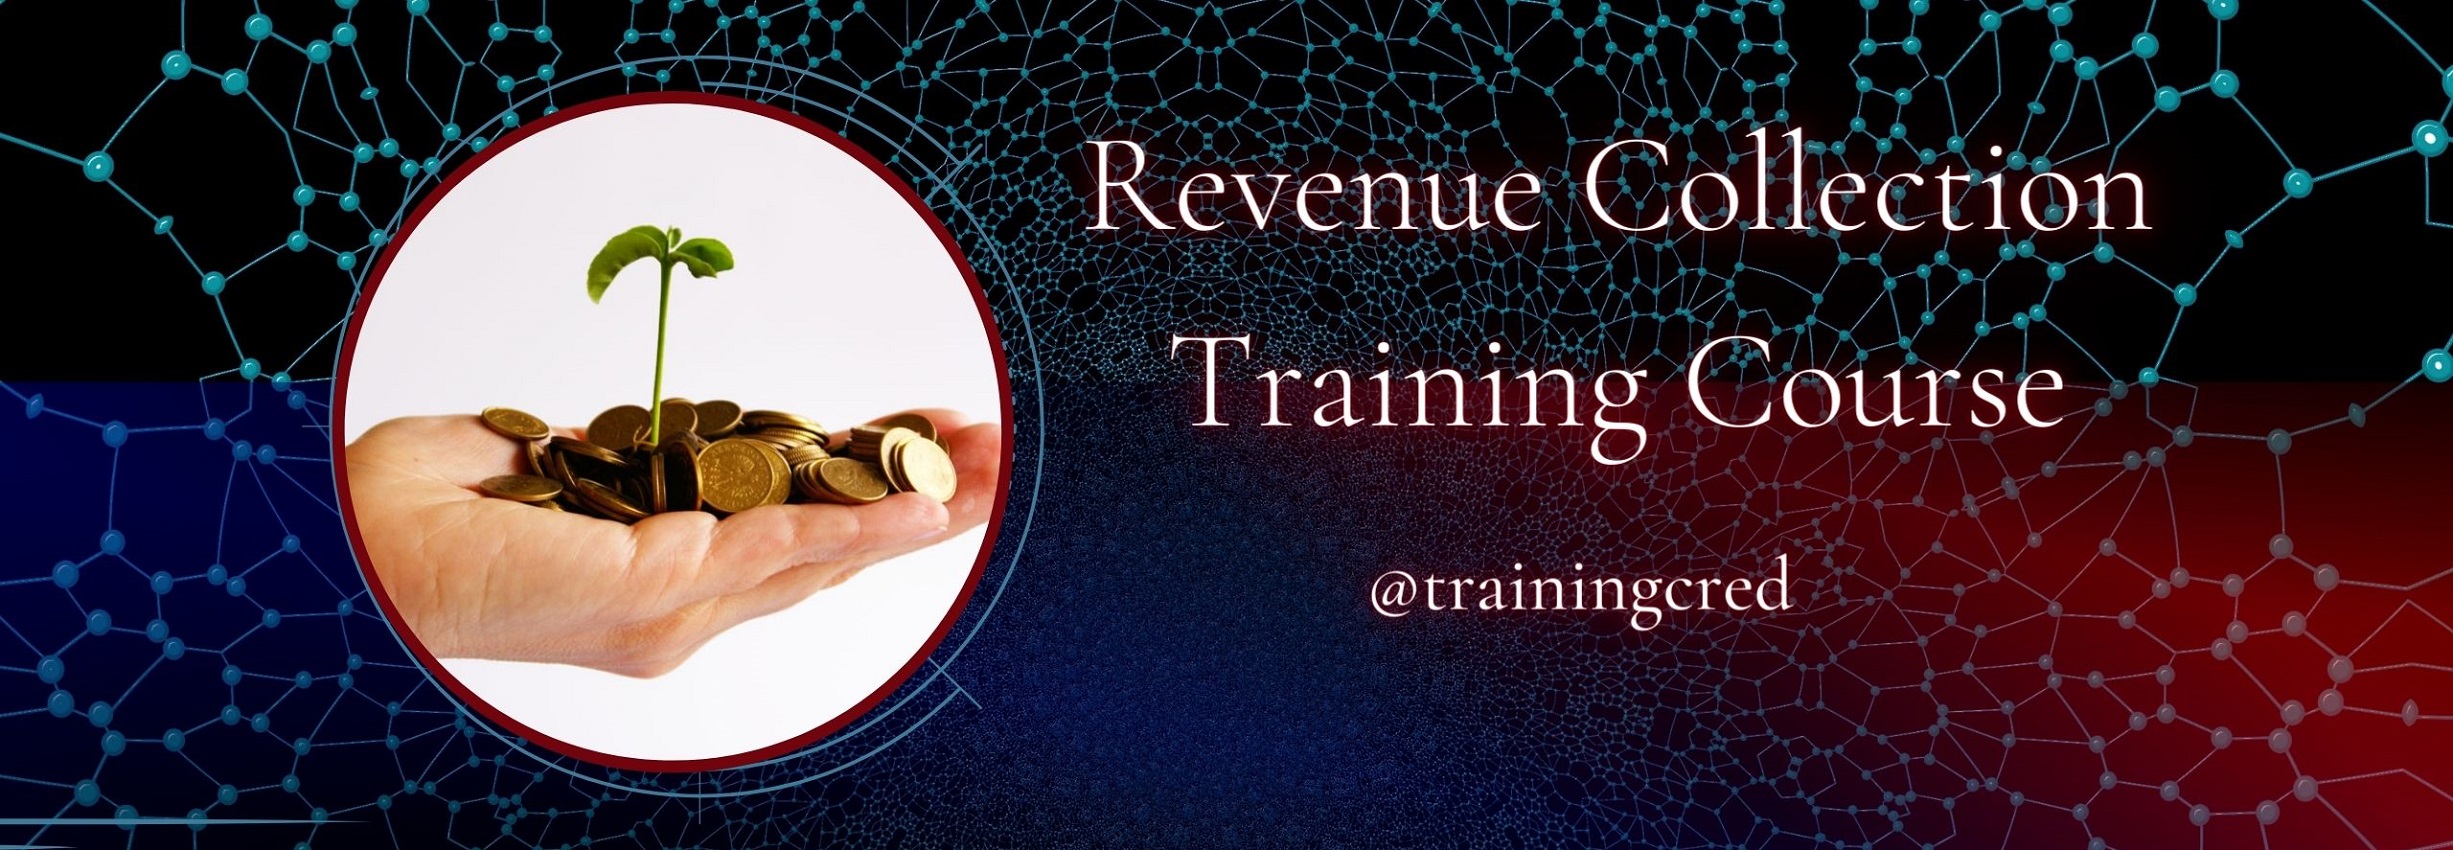 Advanced Revenue Collection Strategies Training